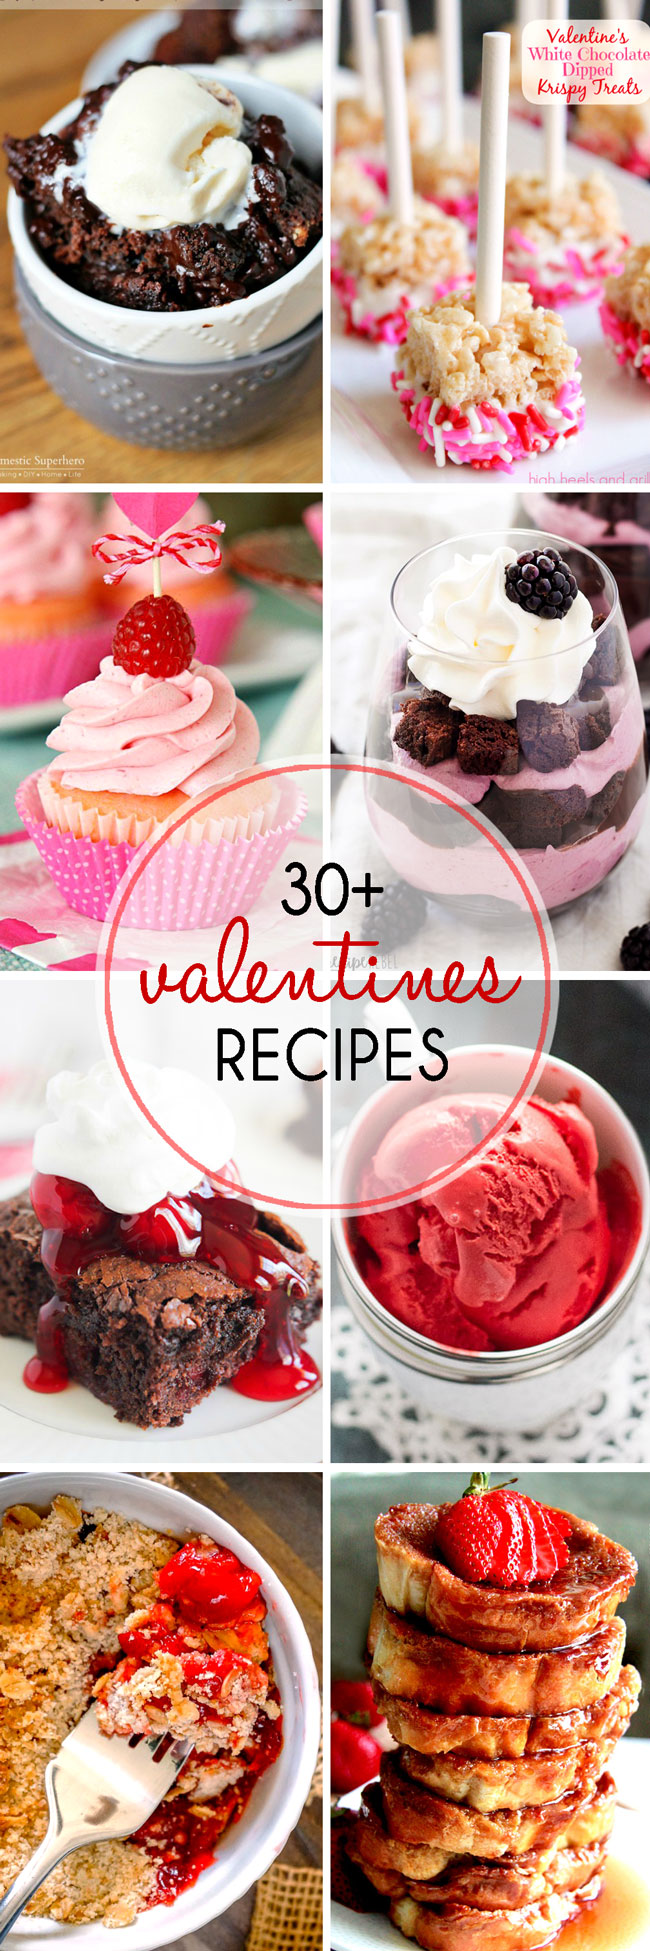 30+ Valentine's Day Recipes